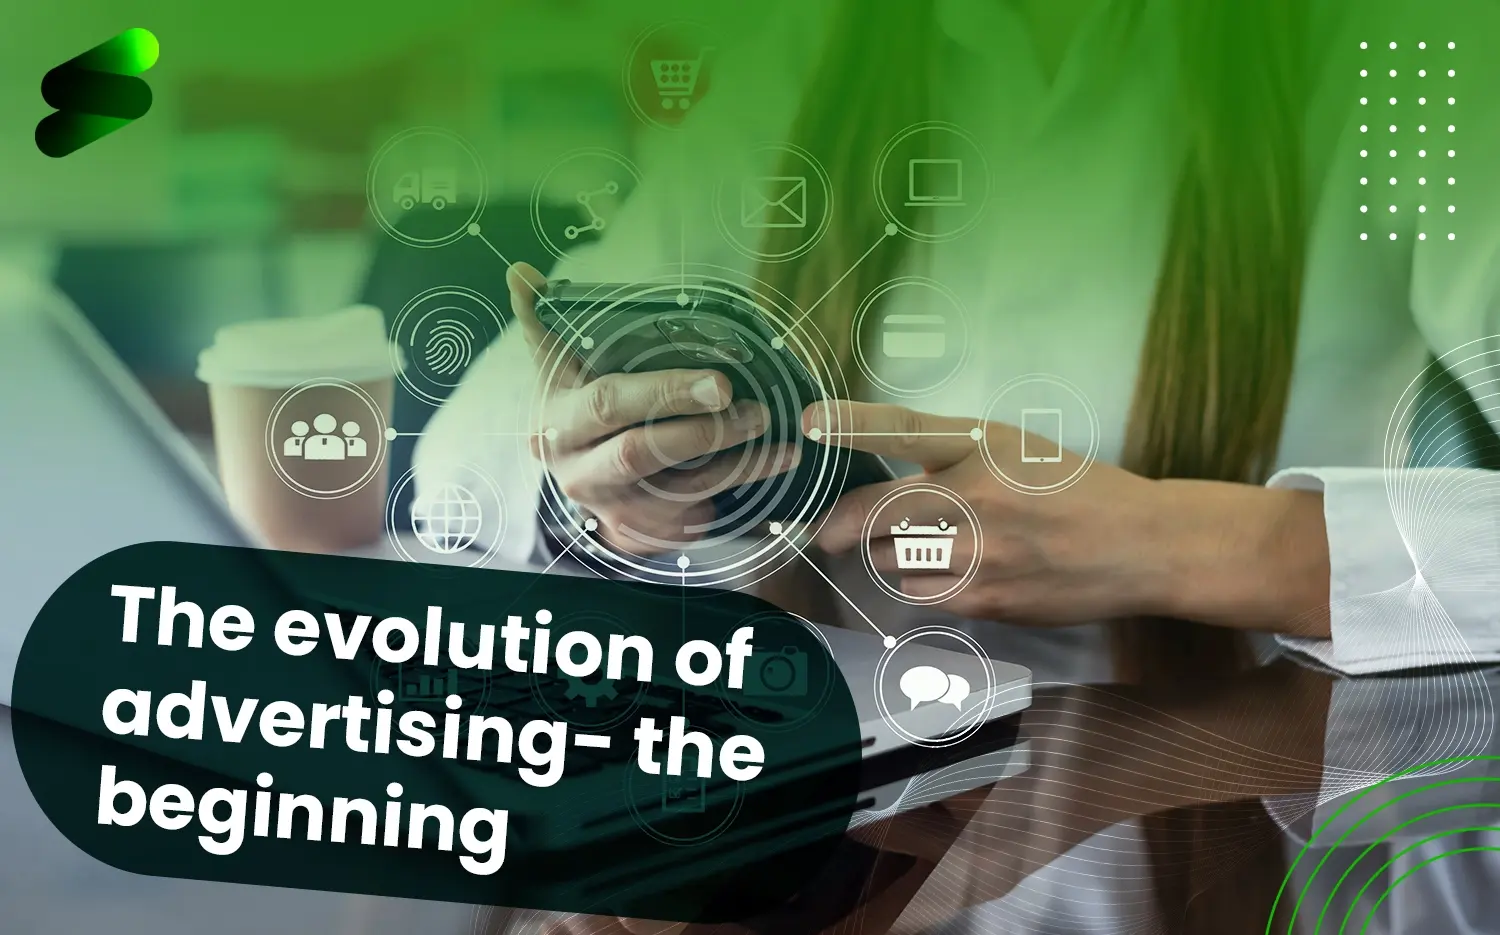 Evolution of advertising- the beginning